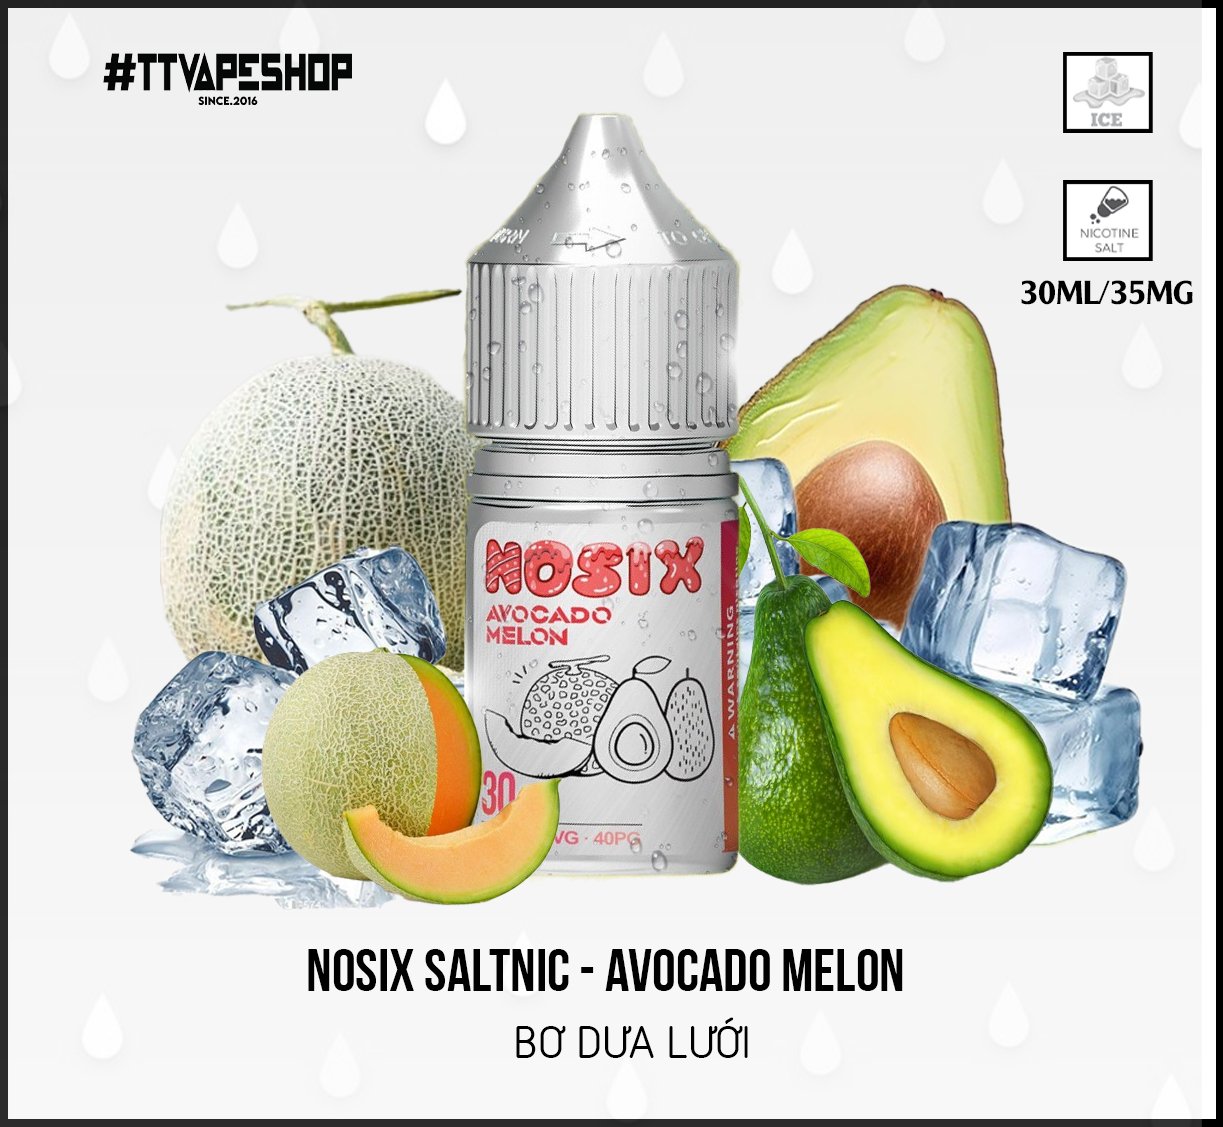 Nosix Saltnic Avocado Melon ( 35-55mg/30ml ) Bơ Dưa Lưới